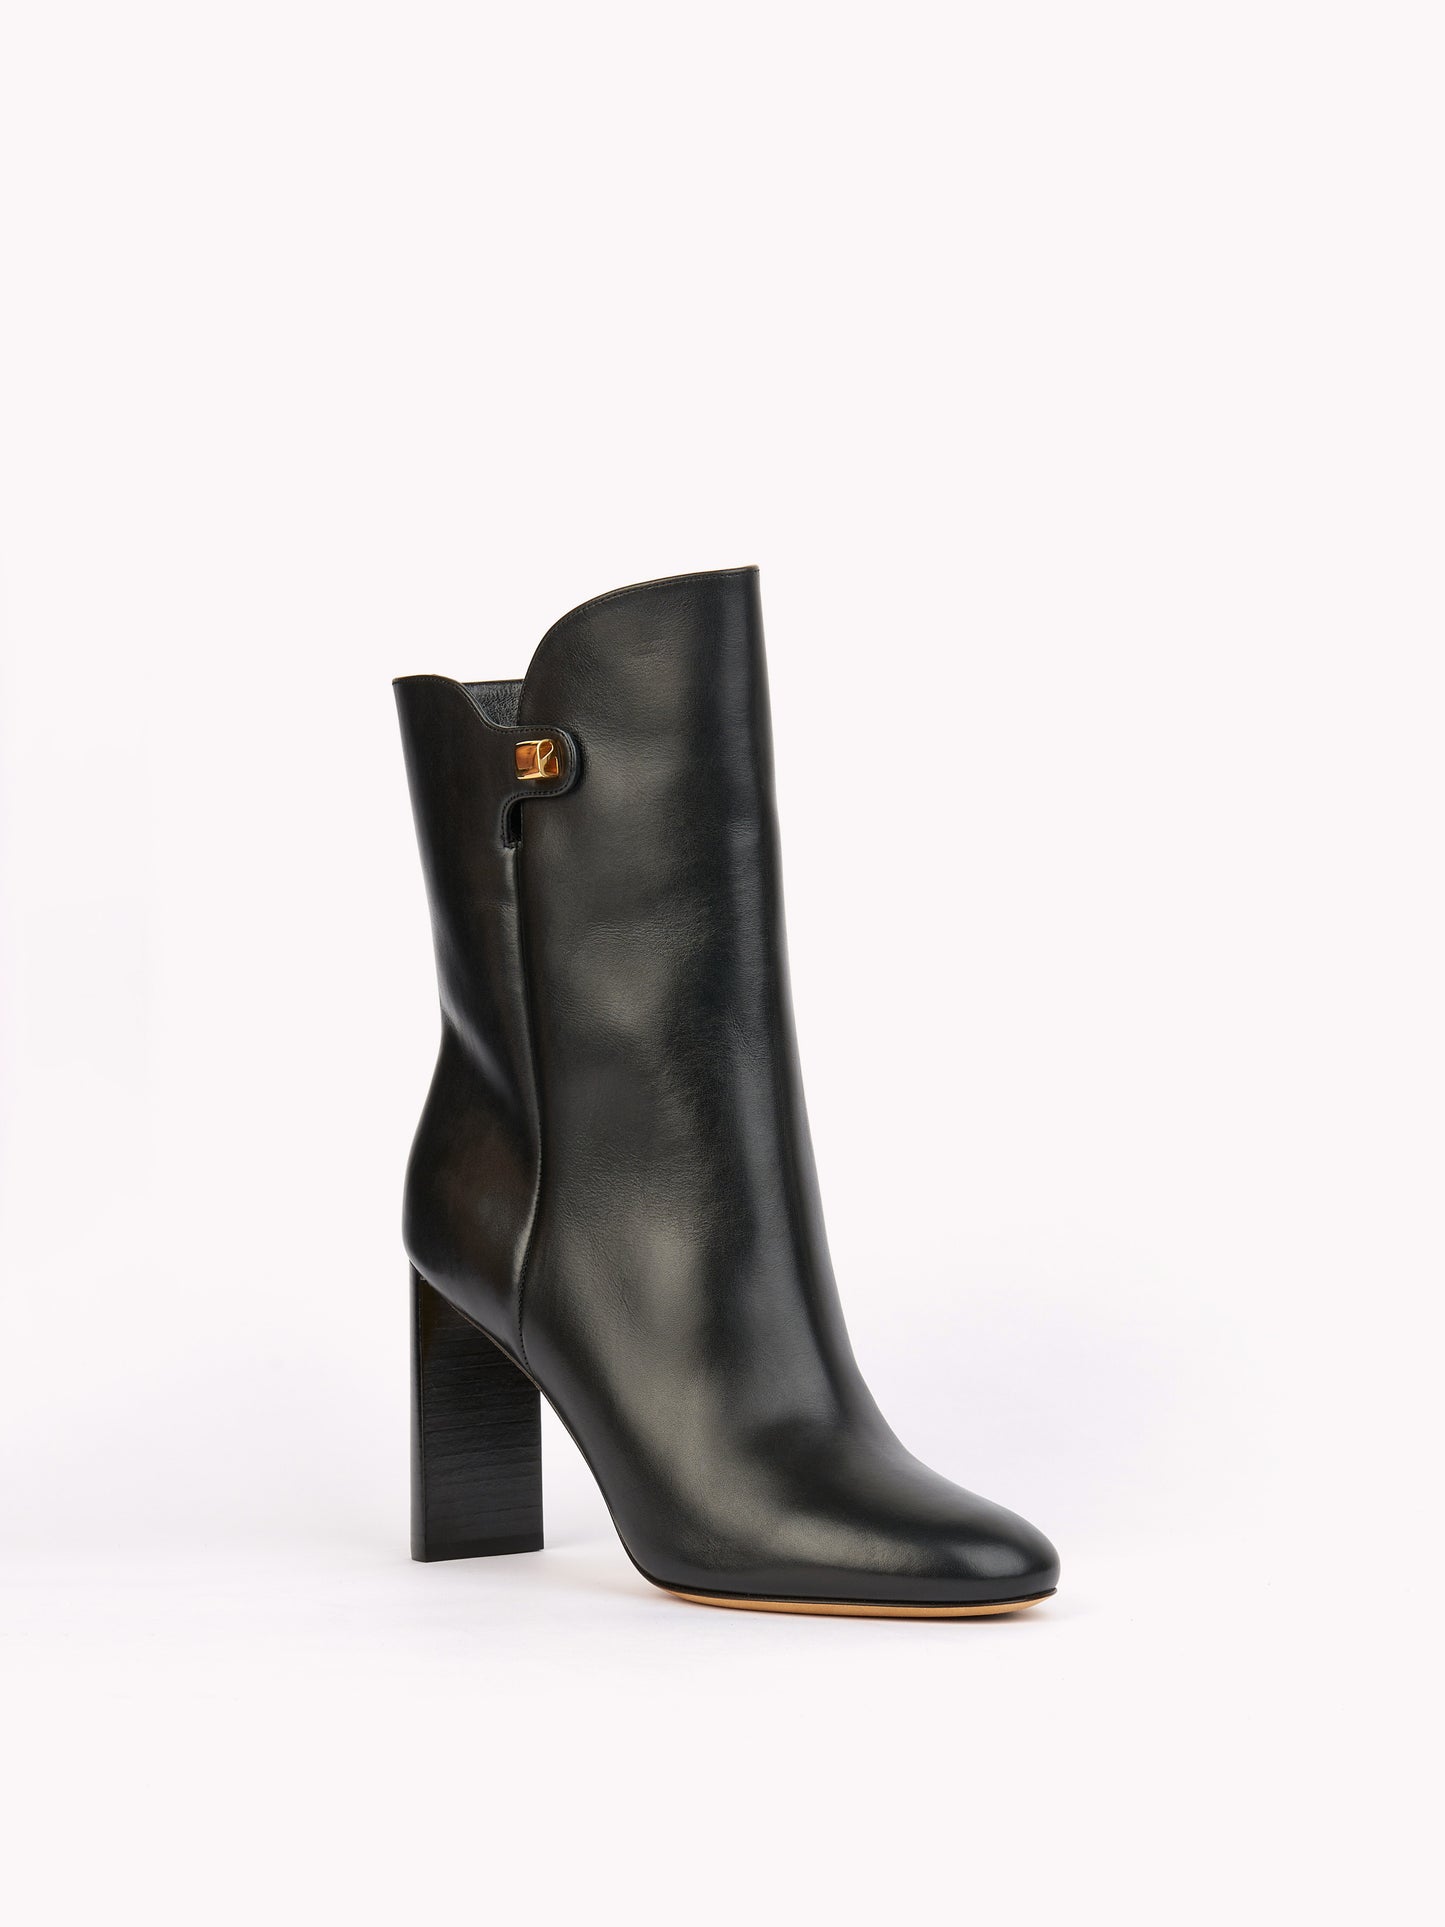 high heels black leather ankle boots skorpios